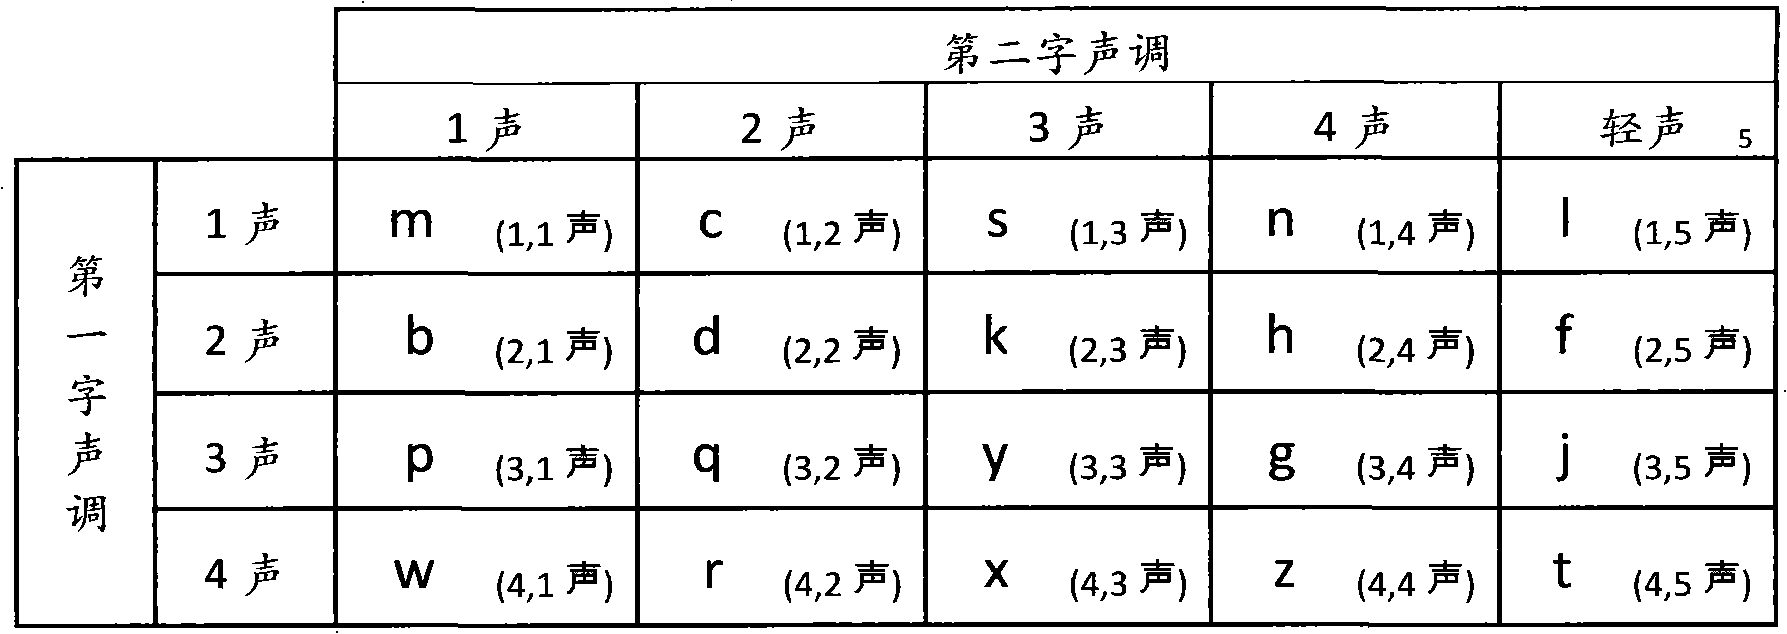 Novel keyboard input short pinyin codes